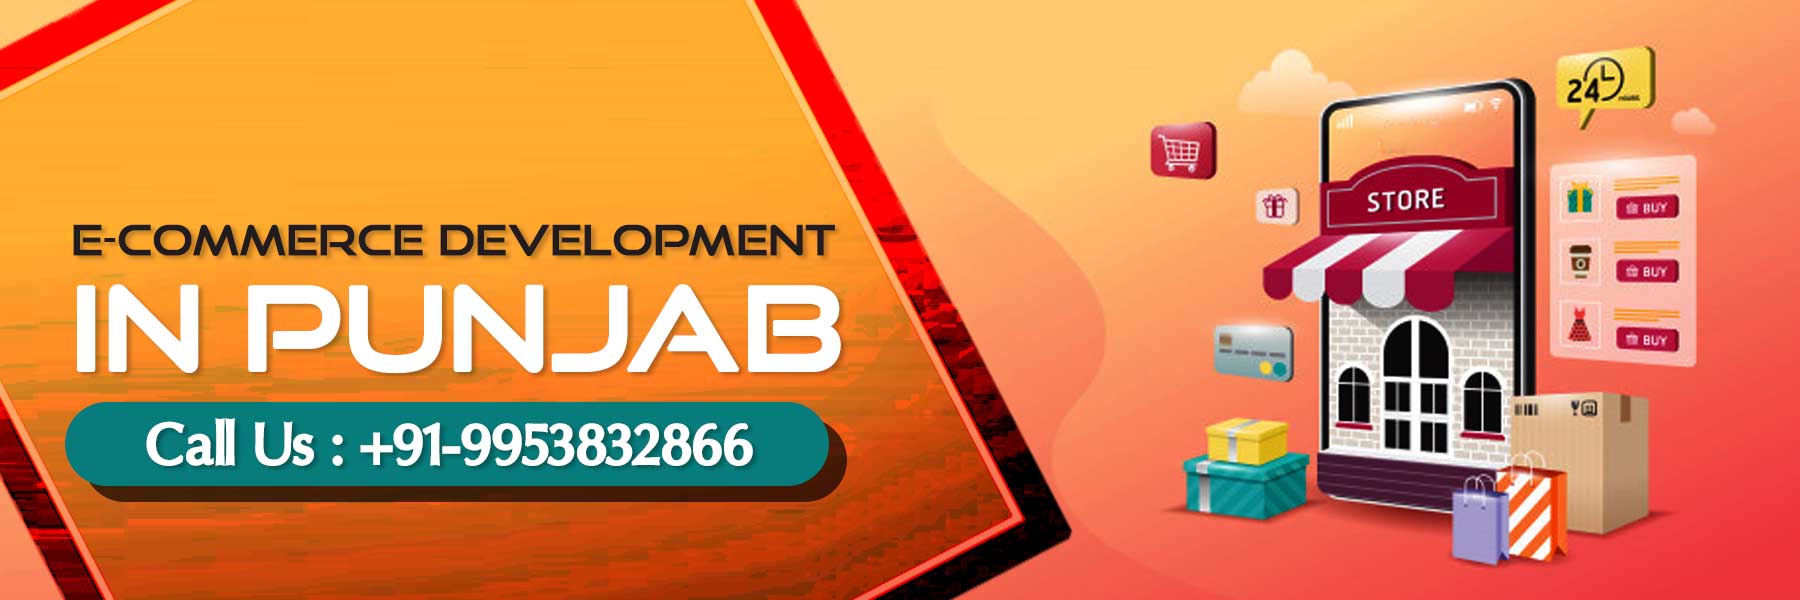 ecommerce development in Punjab